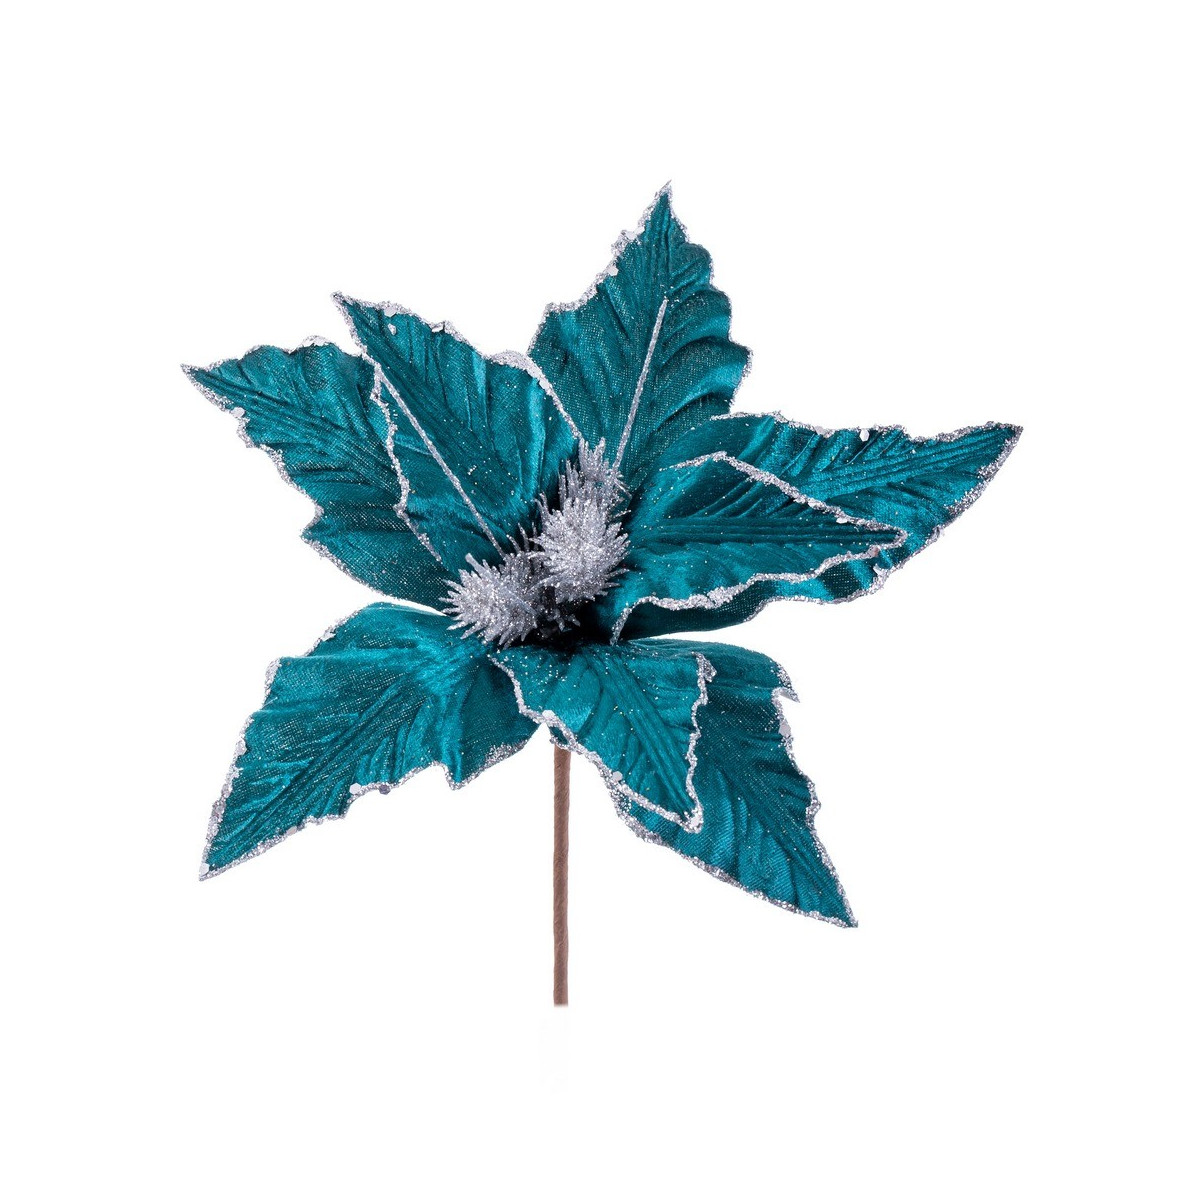 Poinsettia turquoise 31 x 36 cm